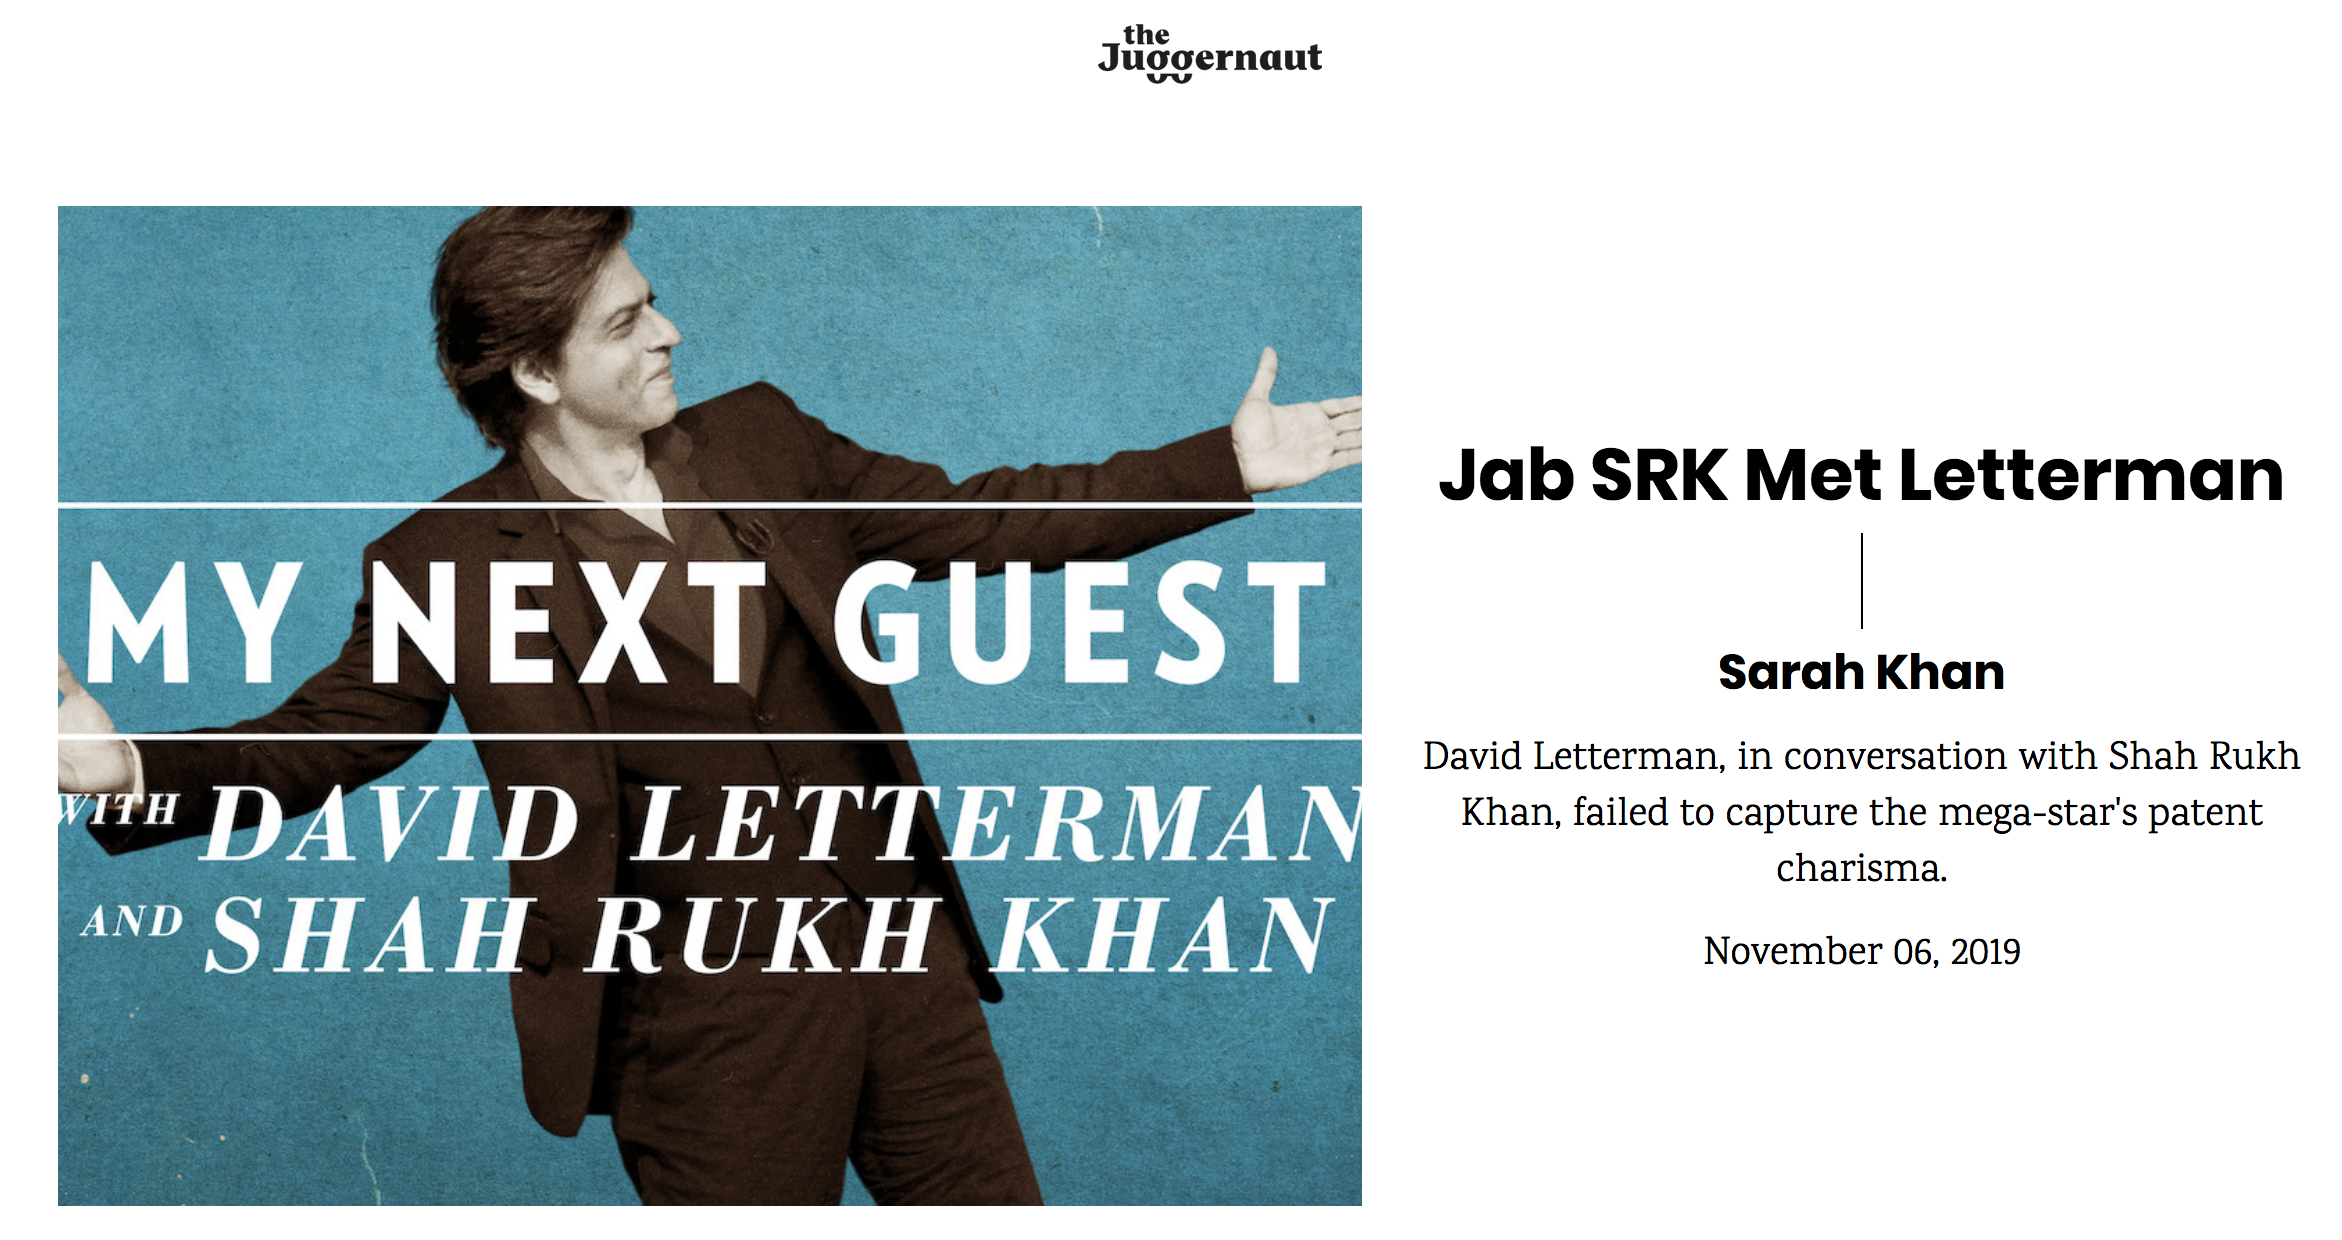 The Juggernaut: When SRK Met Letterman